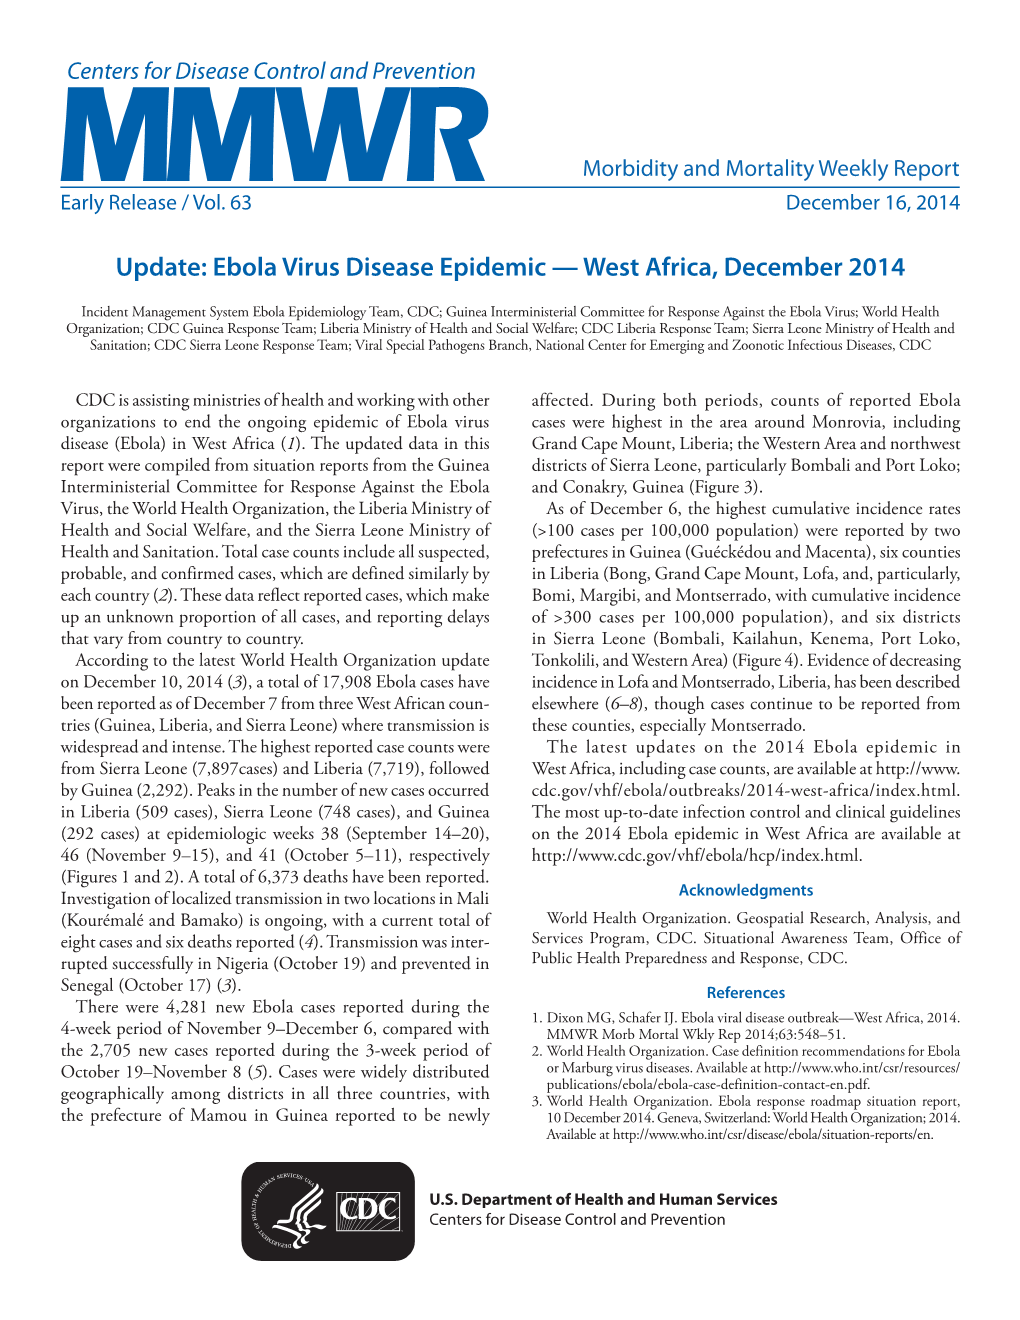 Ebola Virus Disease Epidemic — West Africa, December 2014